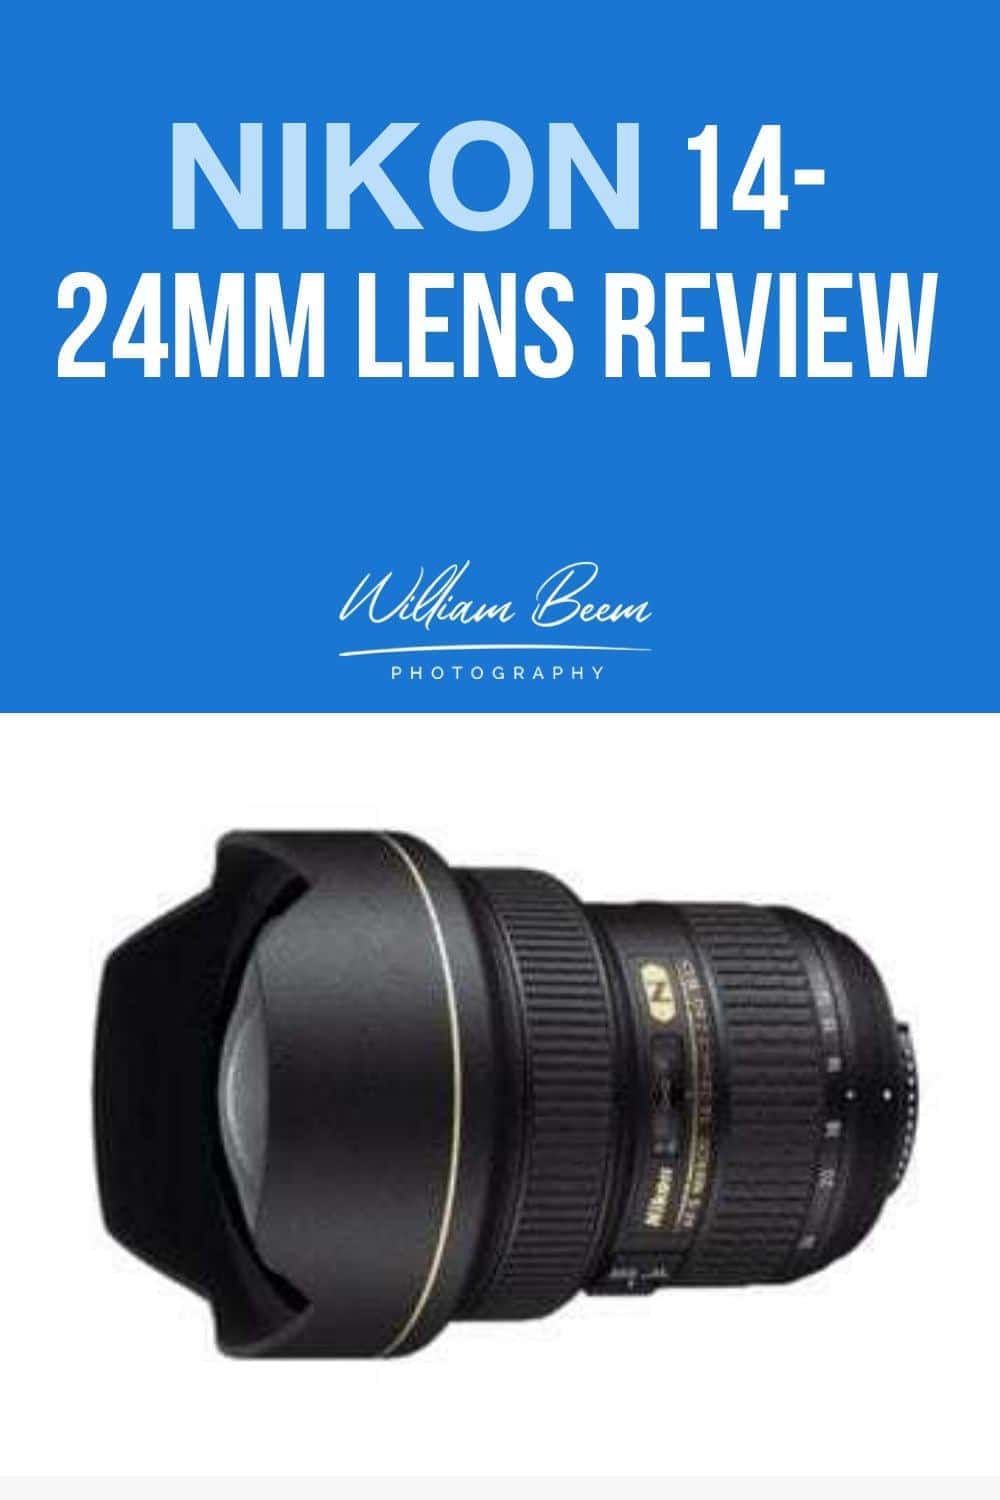 Nikon 14-24mm Lens Review